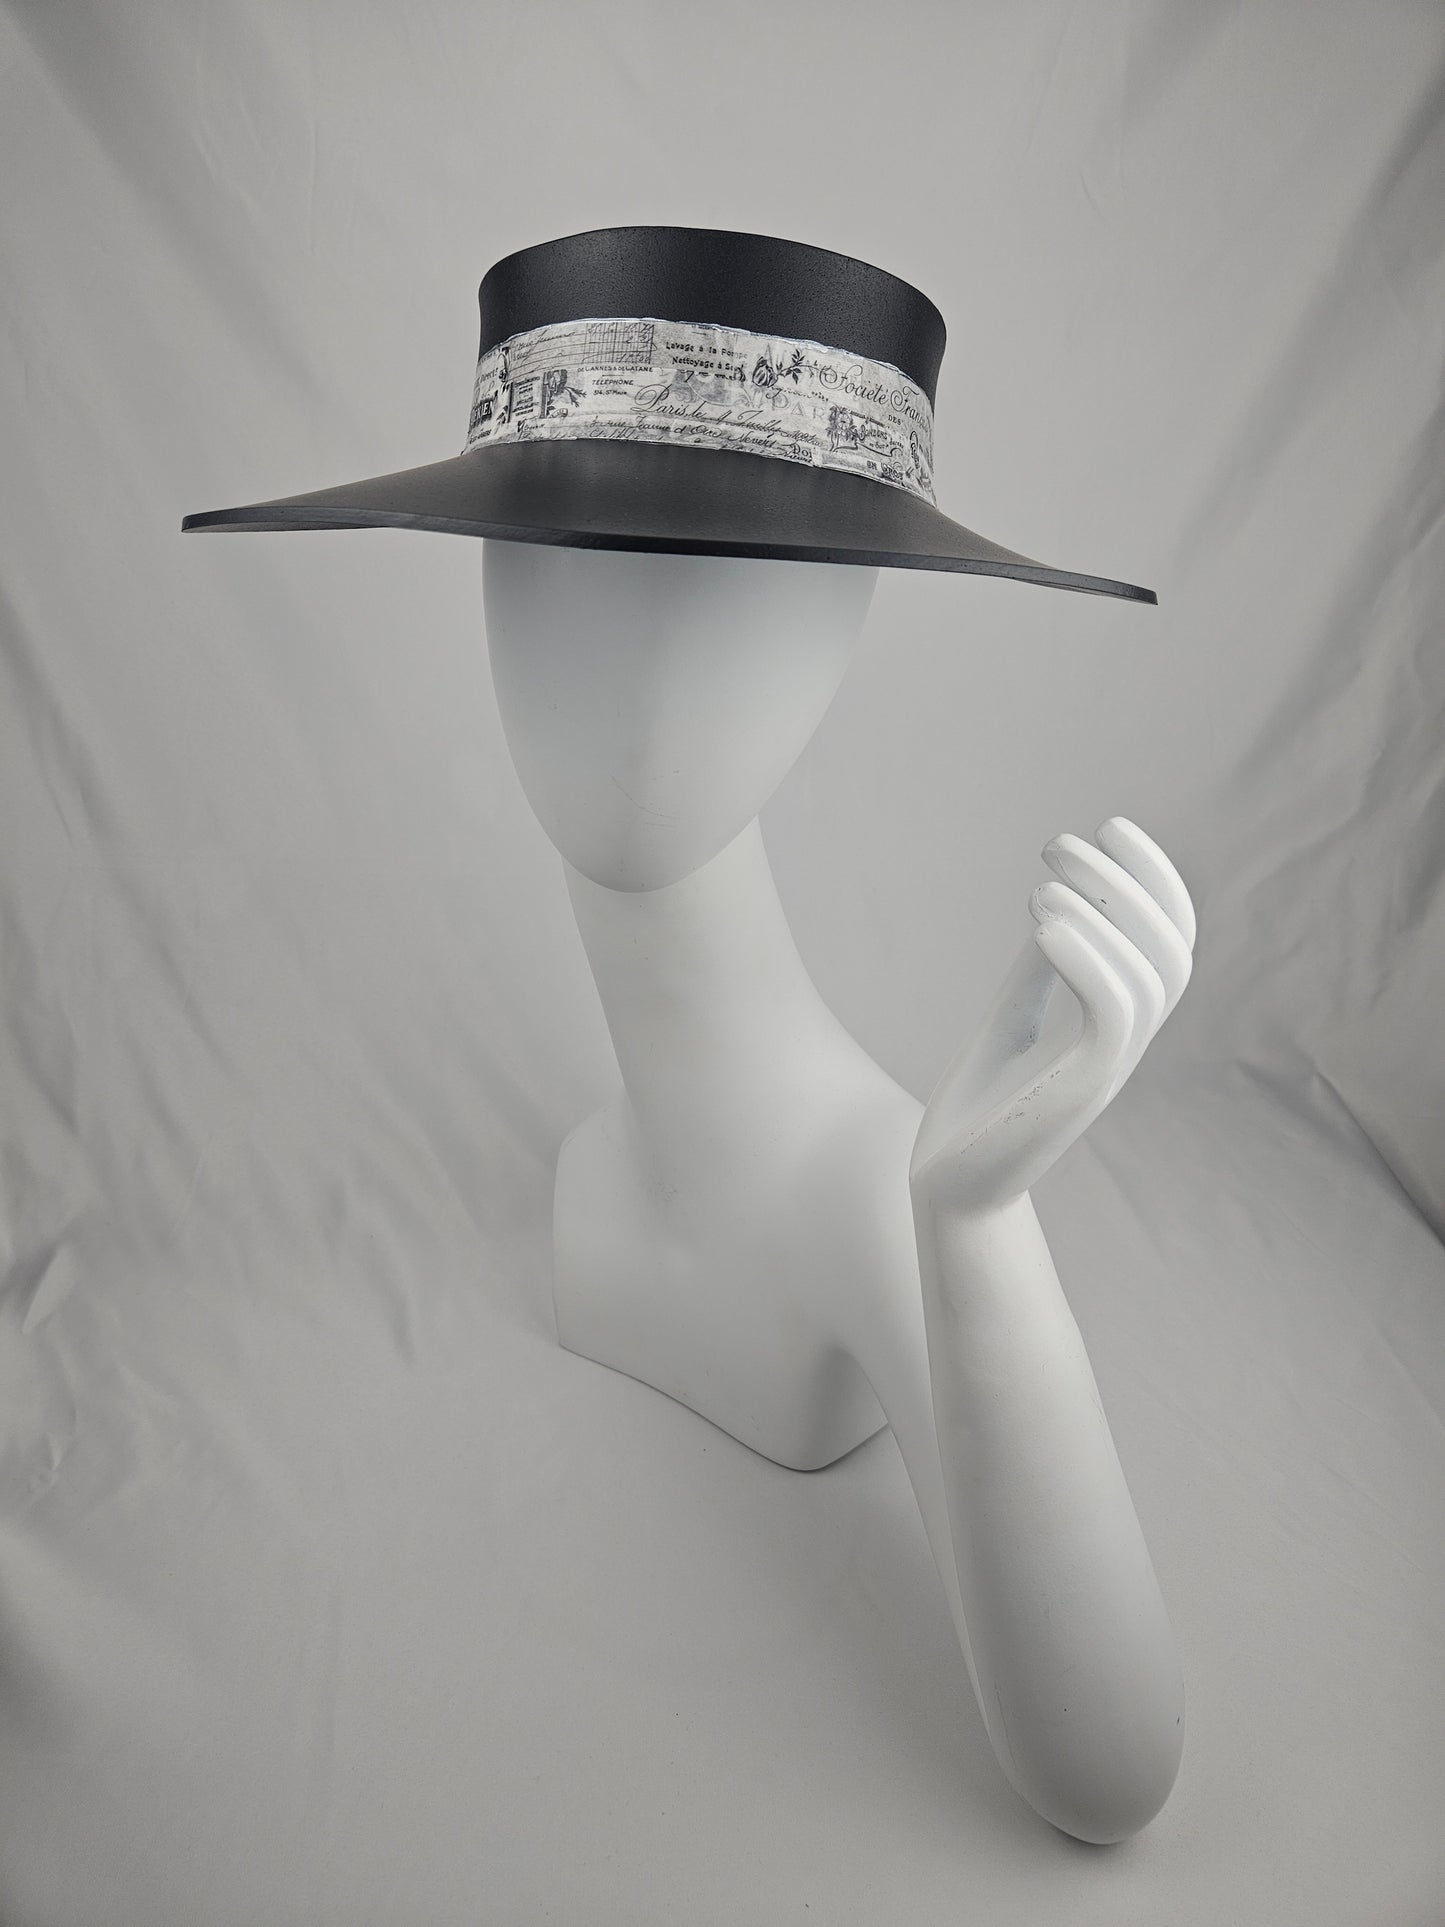 Timeless Black Audrey Foam Sun Visor Hat with Cute French Themed Band: 1950s, Walks, Brunch, Tea, Golf, Wedding, Church, No Headache, Easter, Pool, Beach